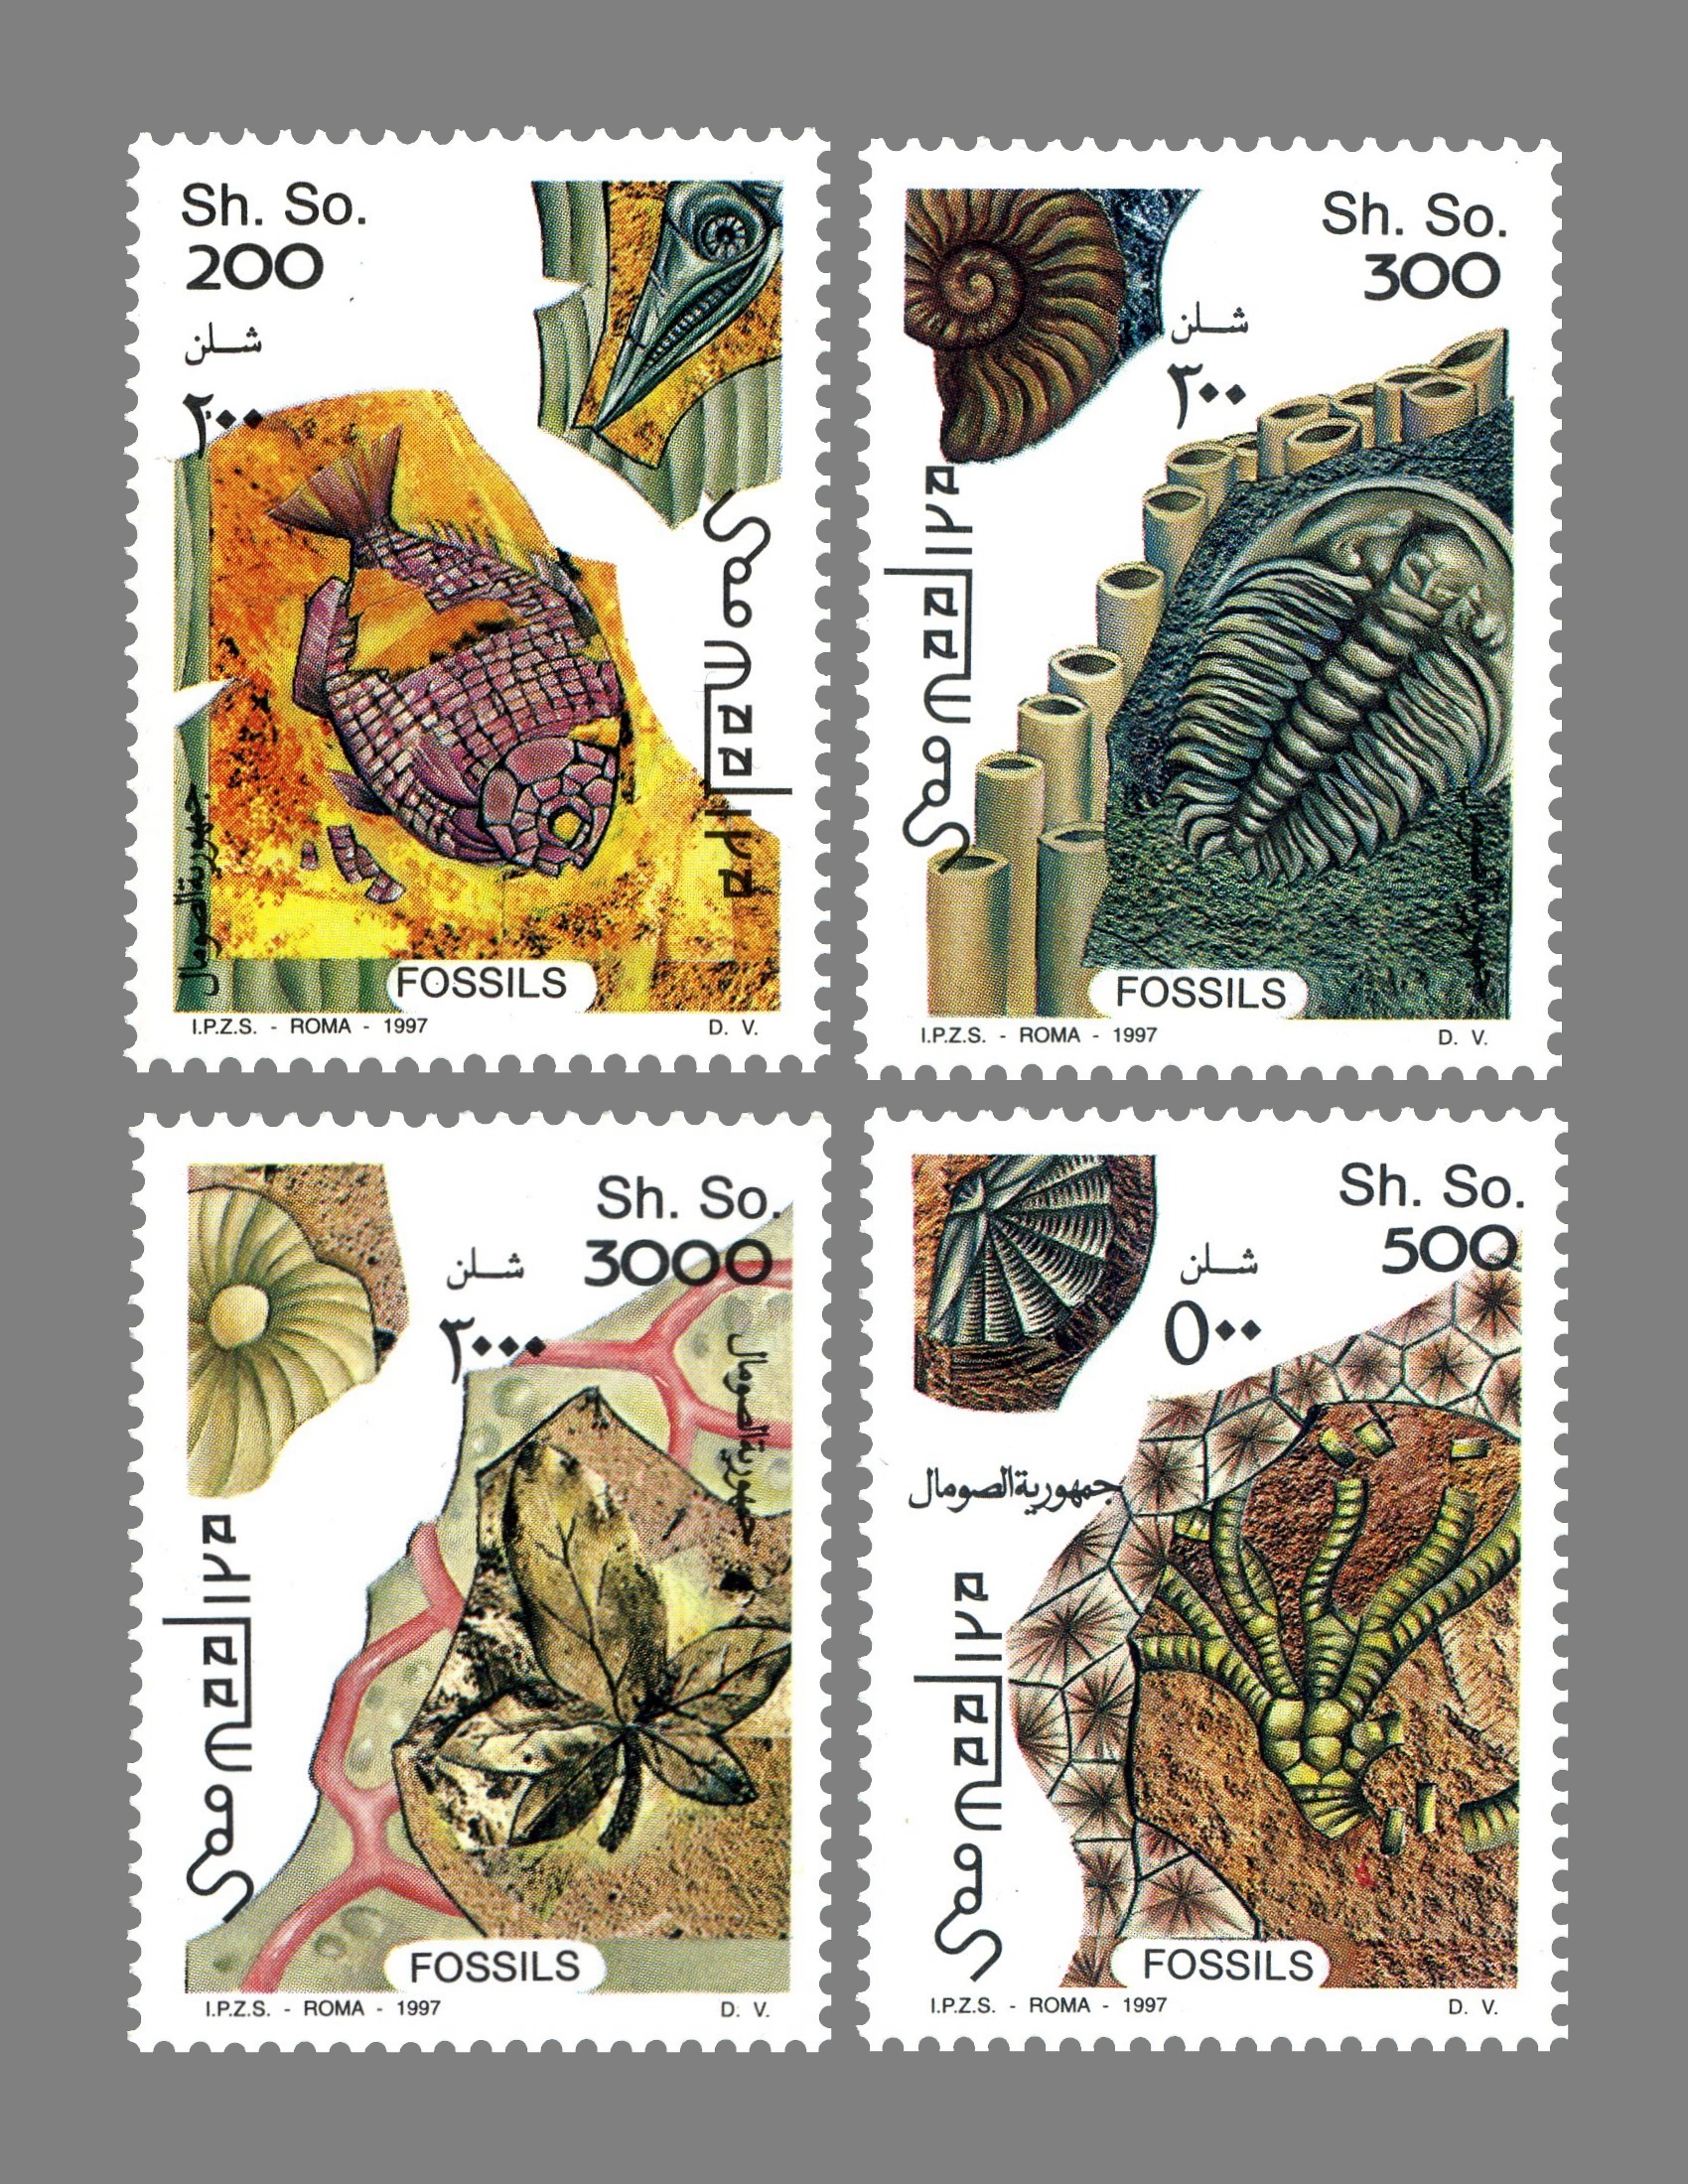 Paleophilatelie.eu - paleontology related stamps of Somalia